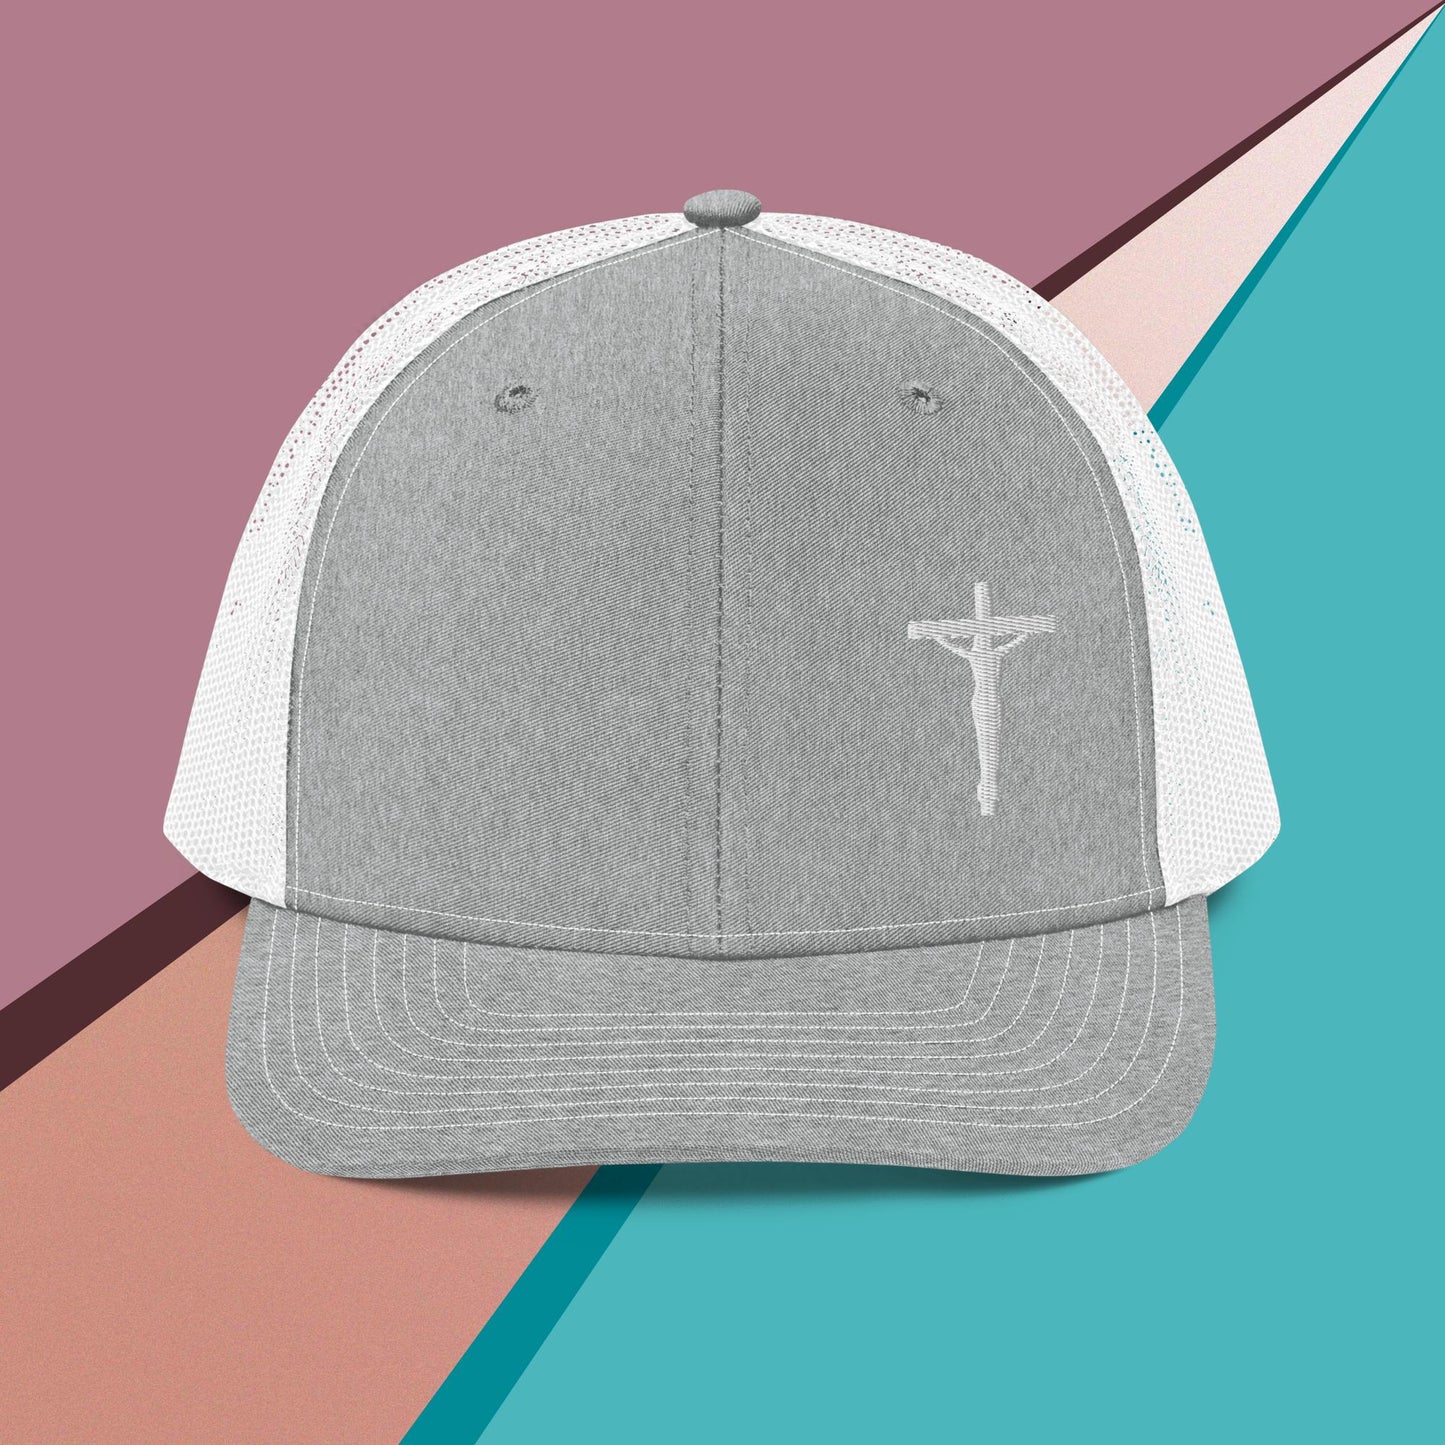 Christ Cross Trucker Hat